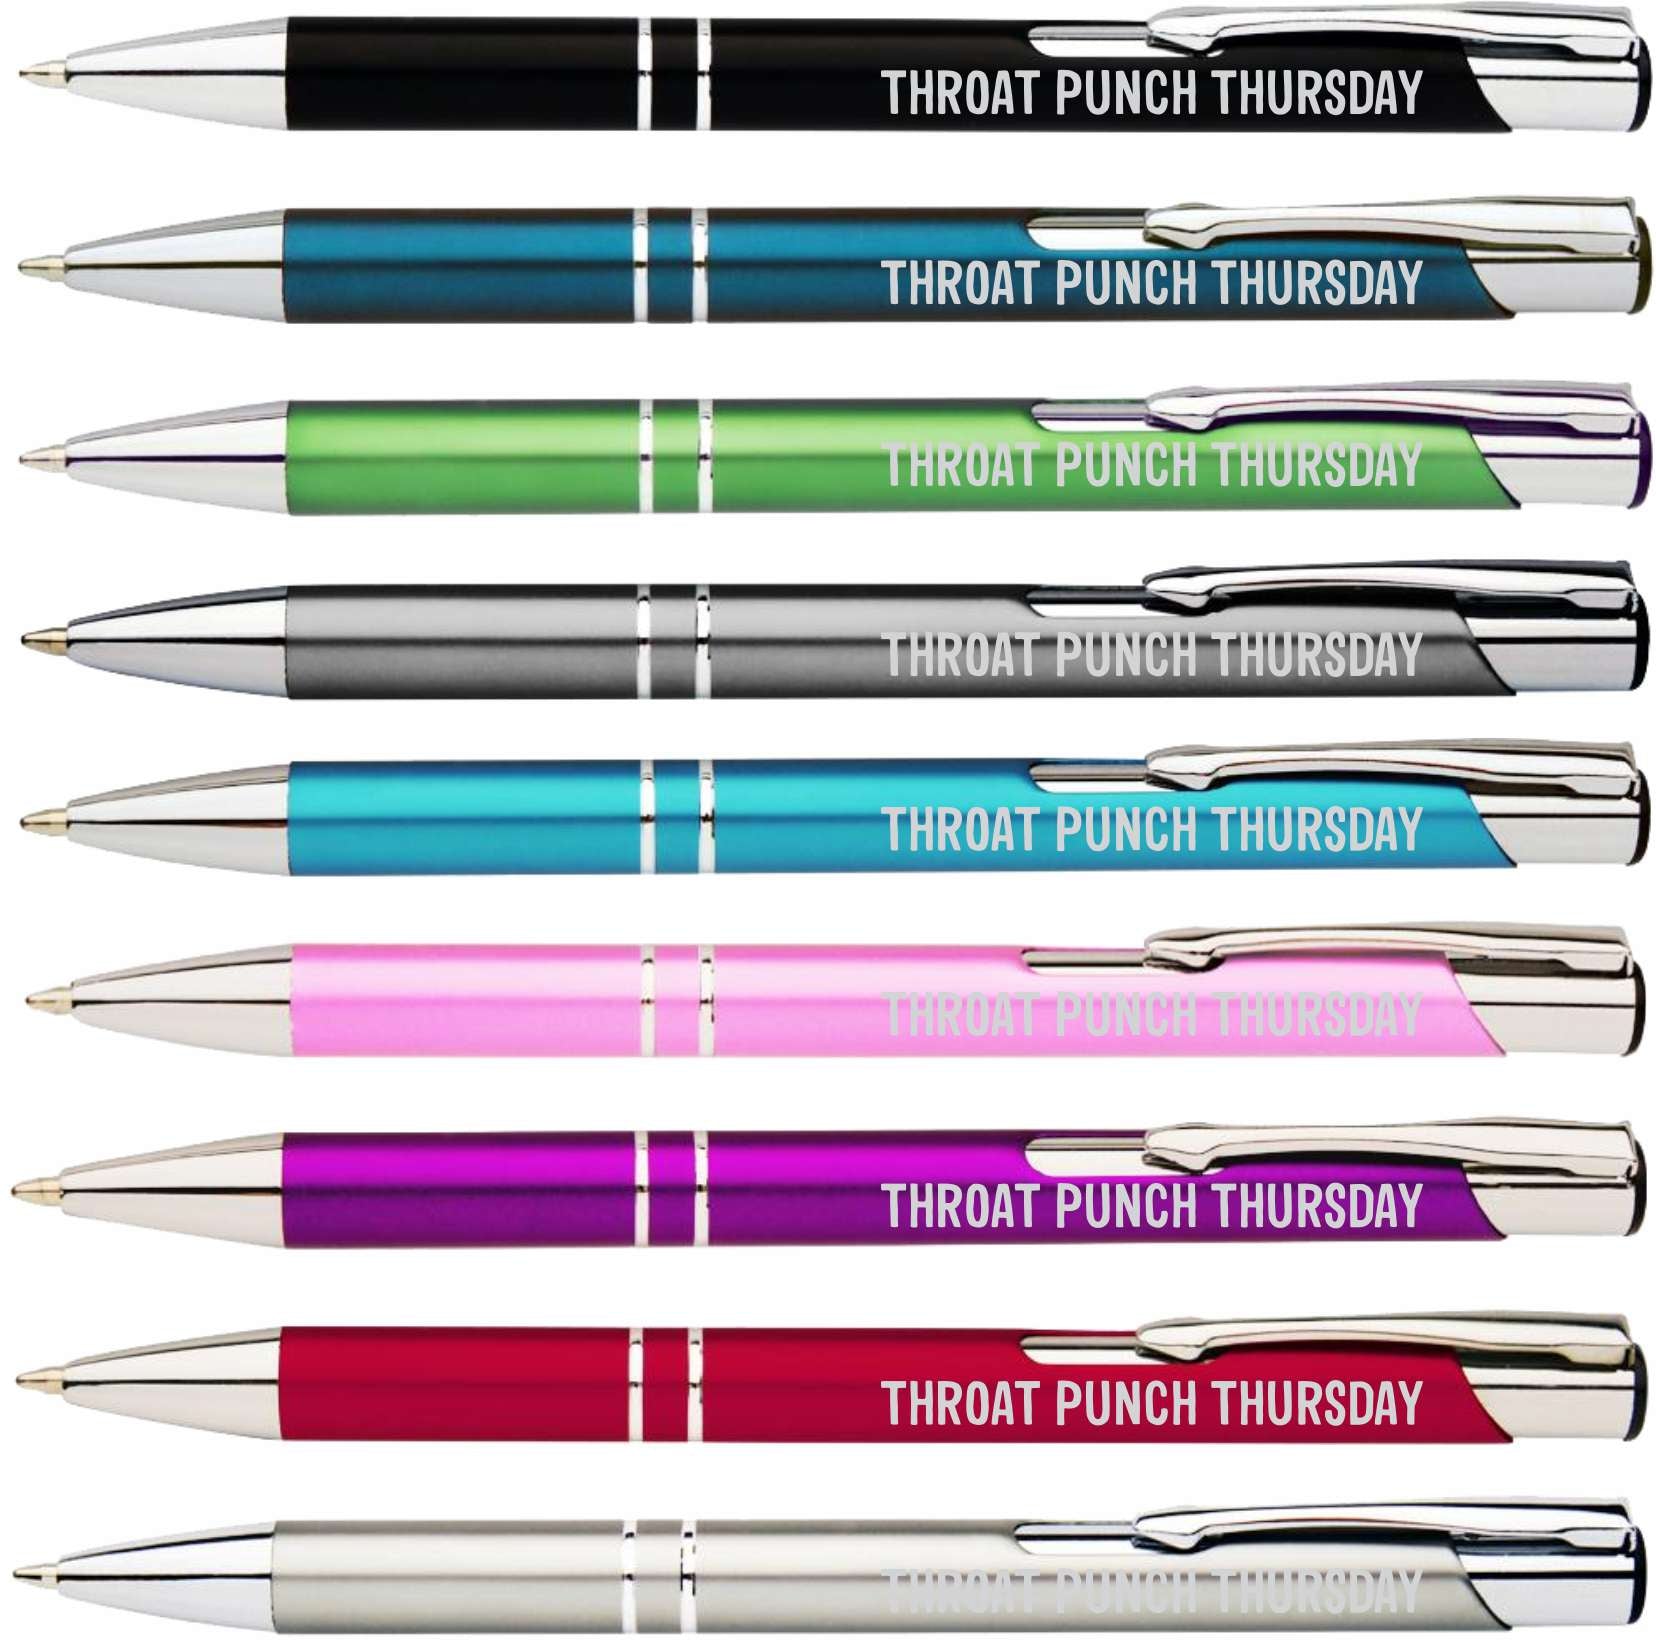 Throat Punch Thursday Pens - CRU10-PG14-13031 – Fair Dinkum Gifts